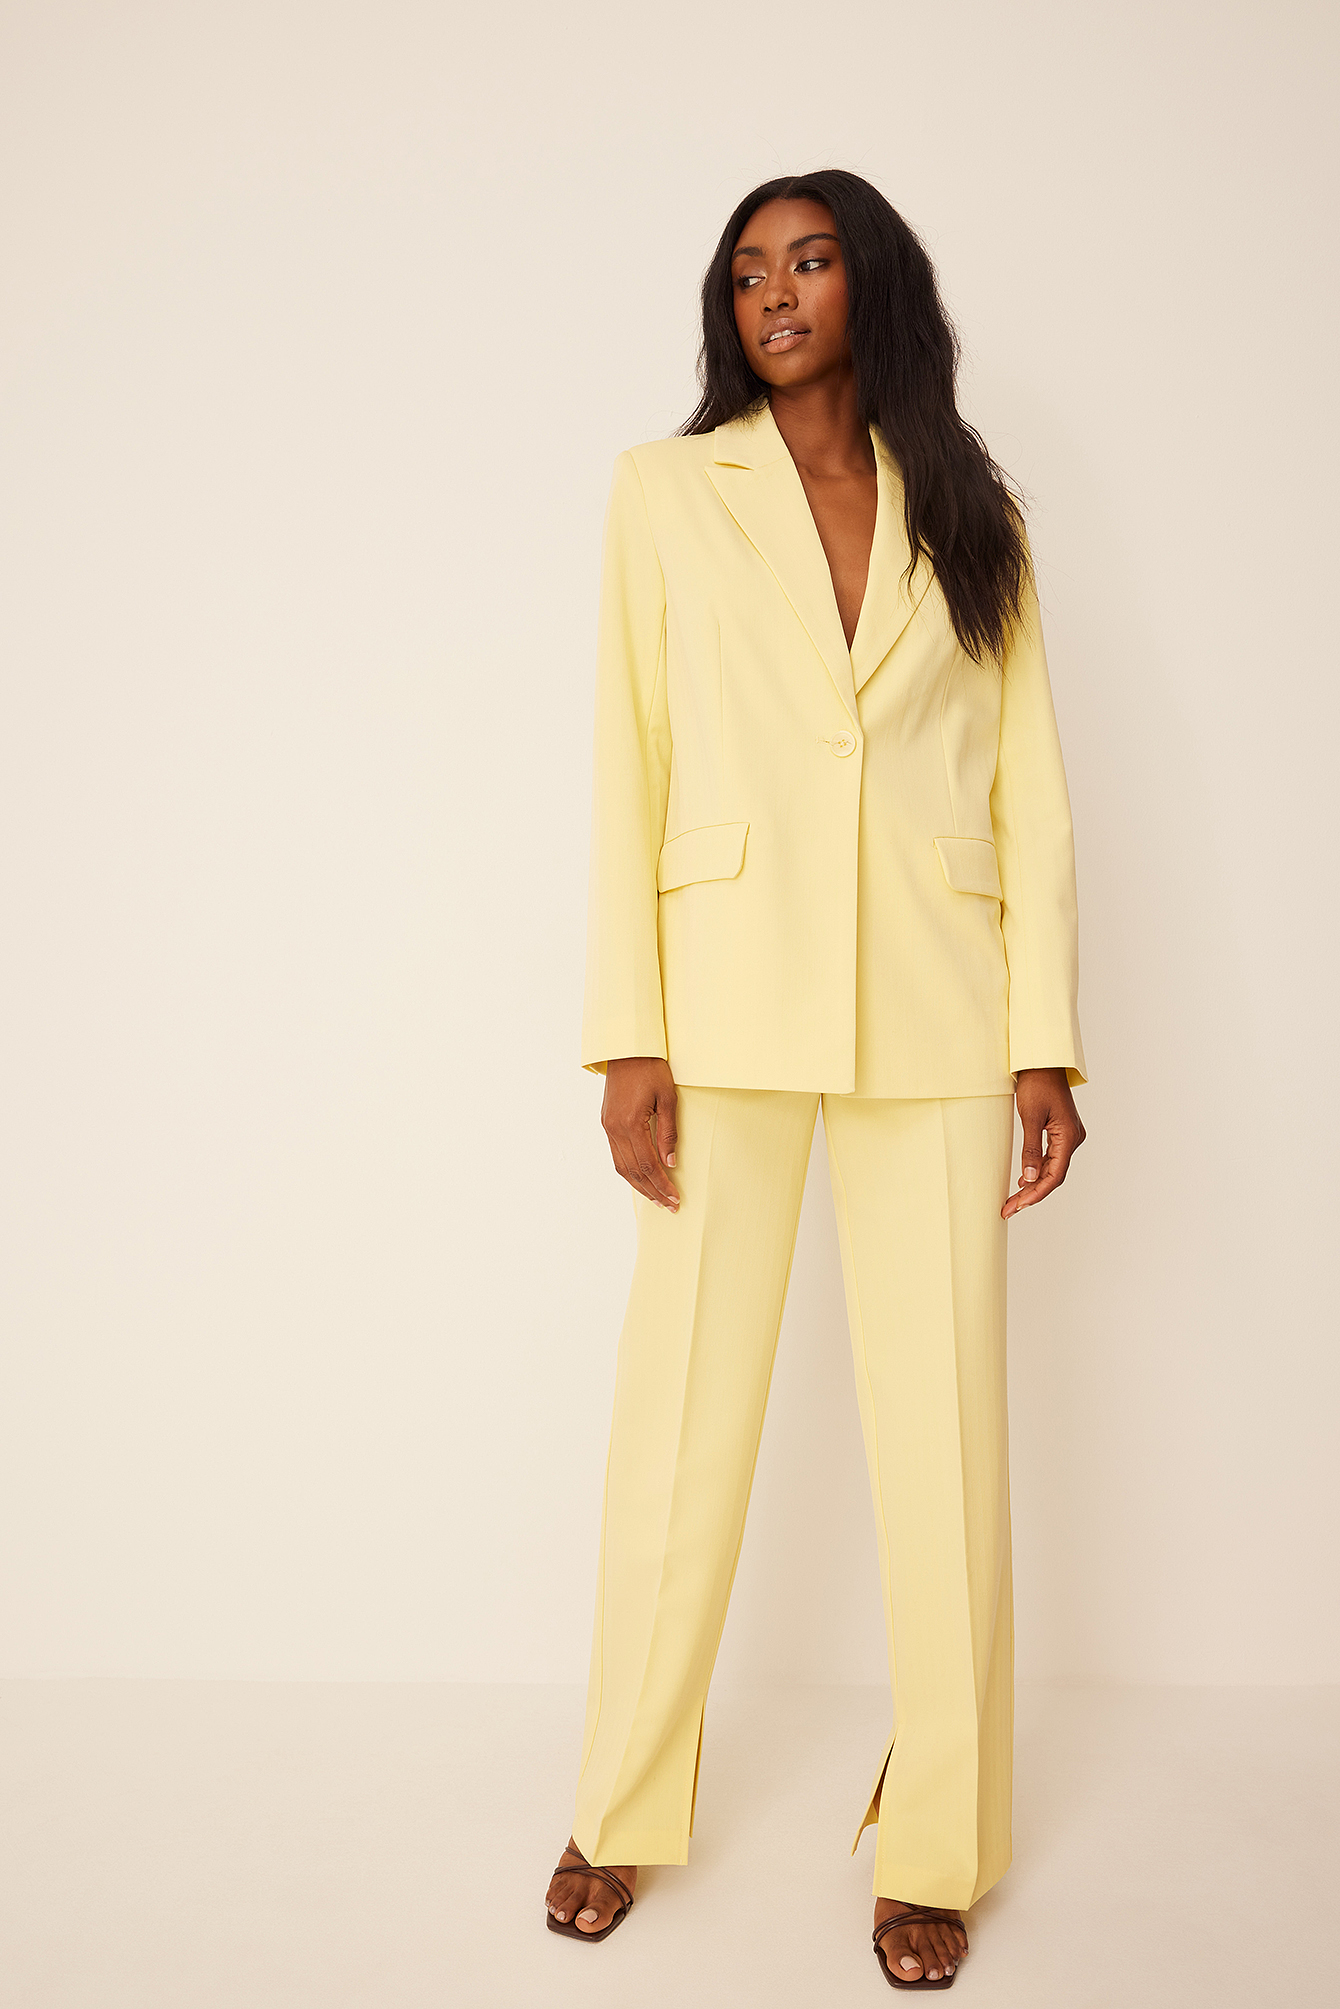 Buy LIROSE Mihira Yellow Crop Top with Pants & Jacket (Set of 3) online